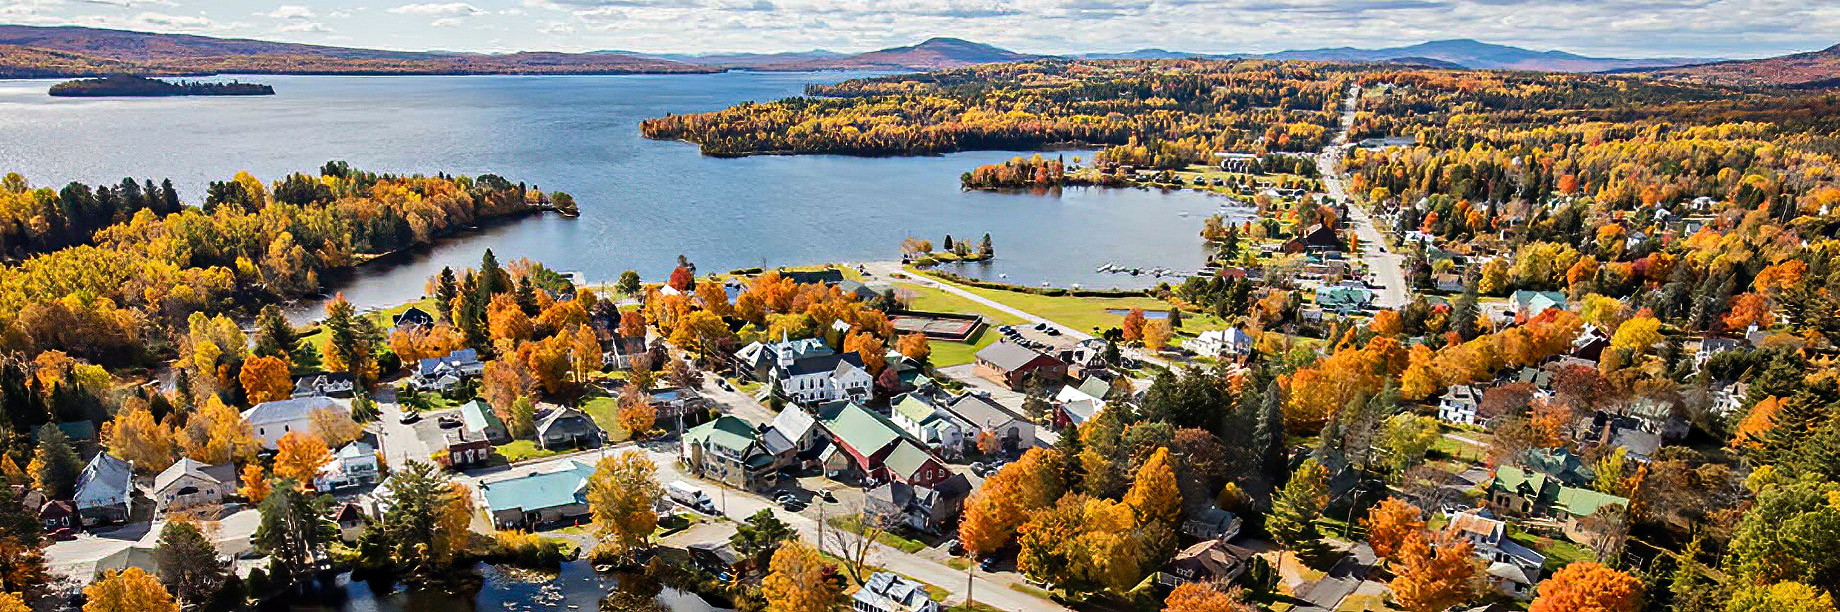 Lakefront Homes - Rangeley, Maine, USA